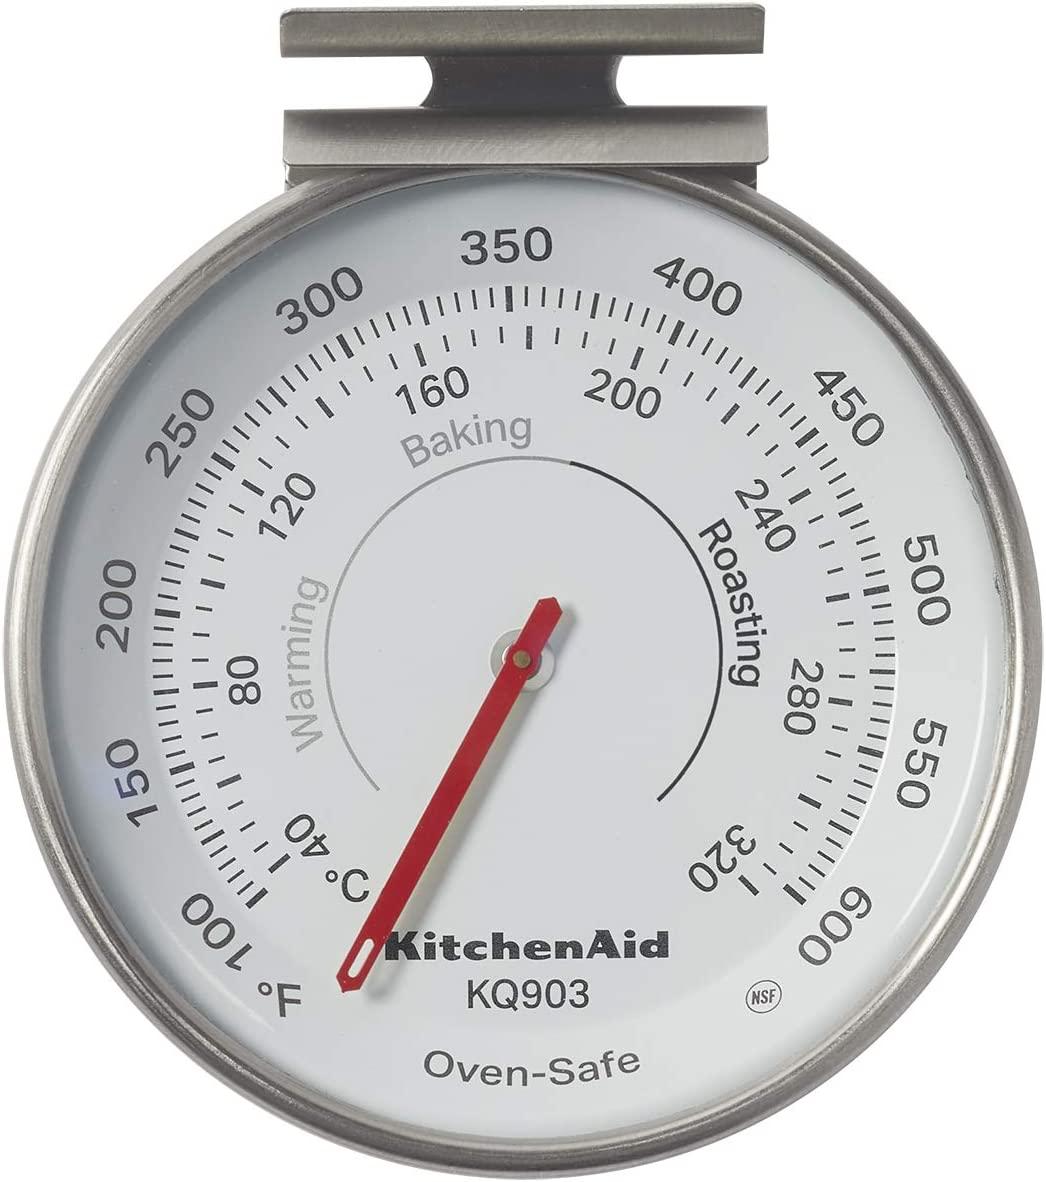  KitchenAid KQ900 Single Event Digital Timer, 2.5